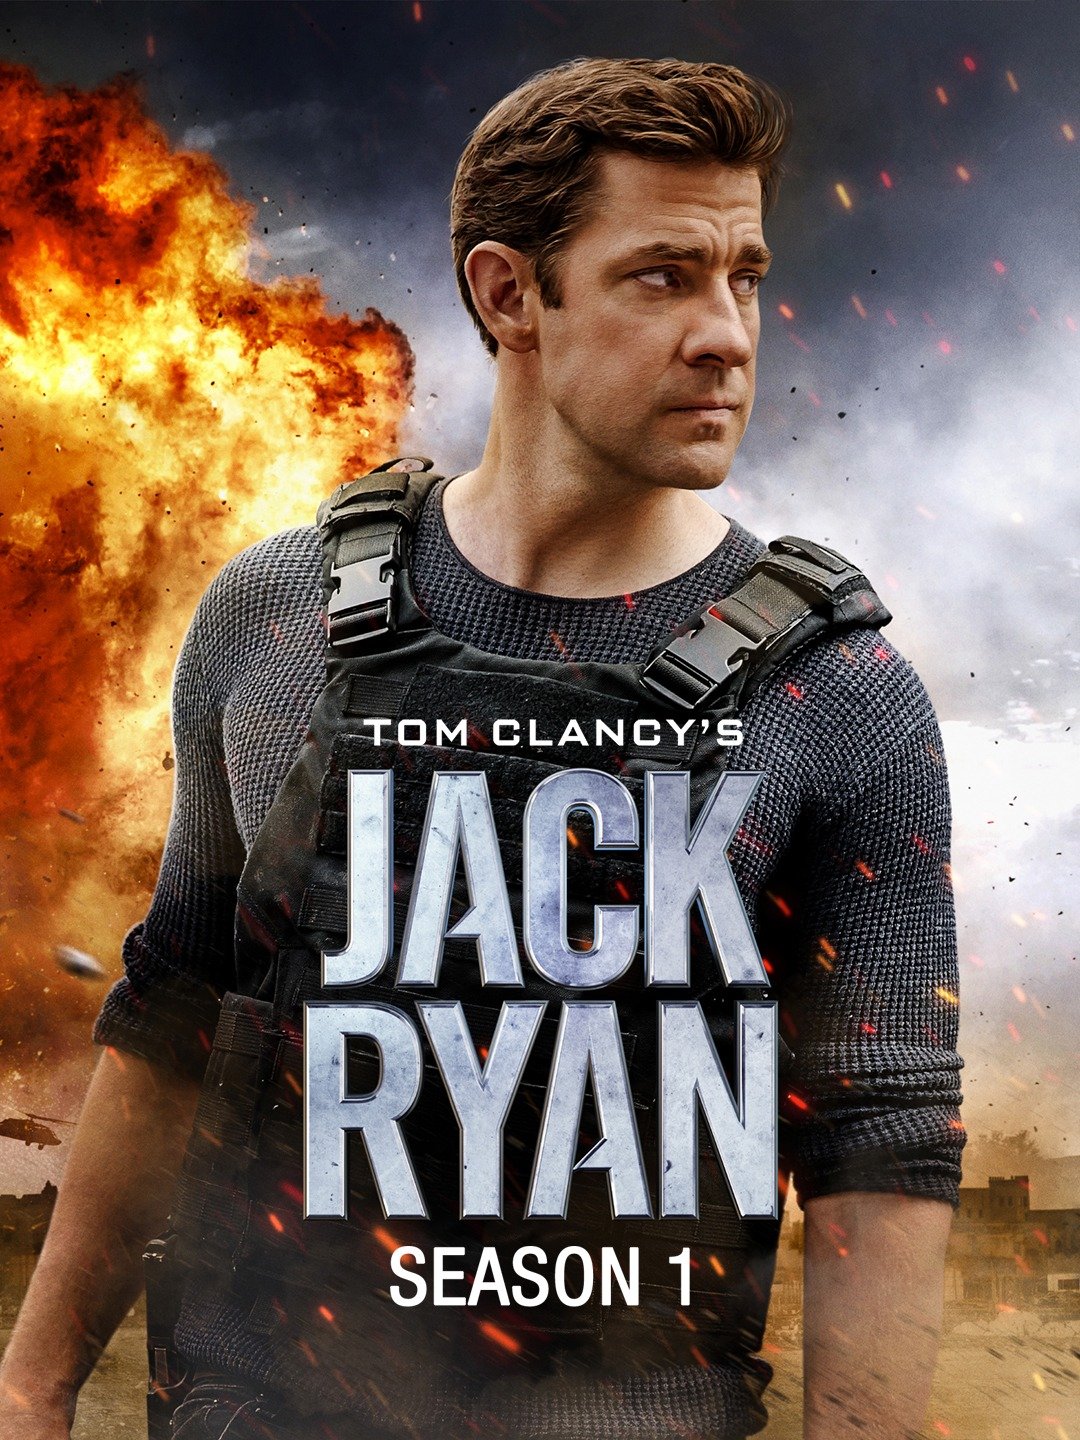 Tom Clancy's Jack Ryan Season 2 TV Series Poster Silk Canvas Poster Print 24x36' 